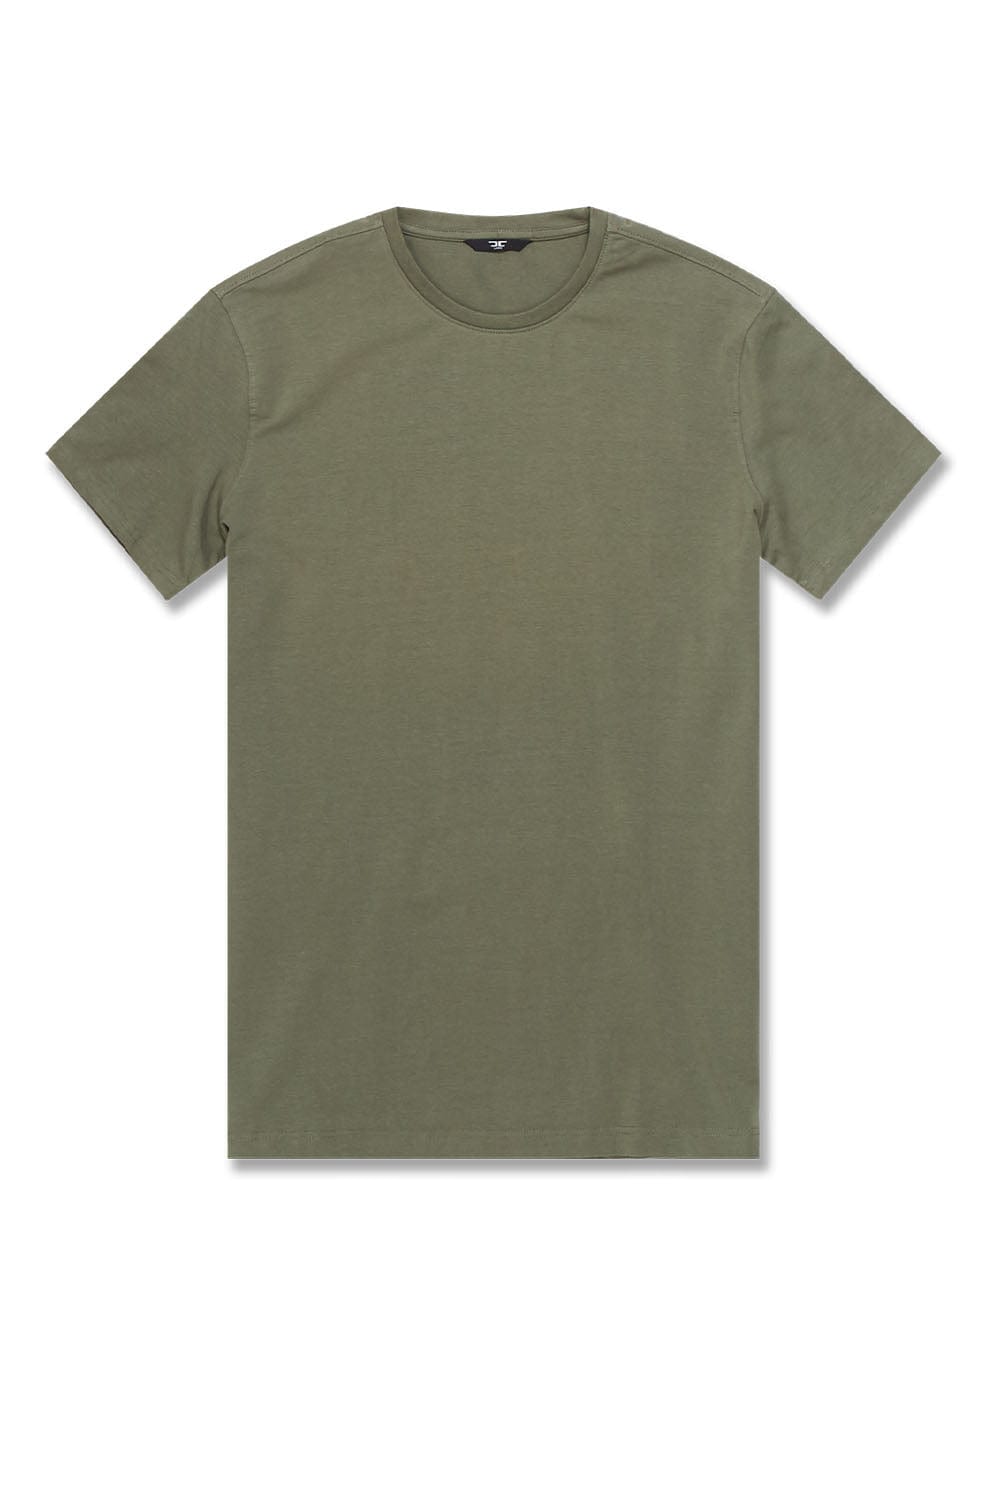 Jordan Craig Premium Crewneck T-Shirt Olive / S